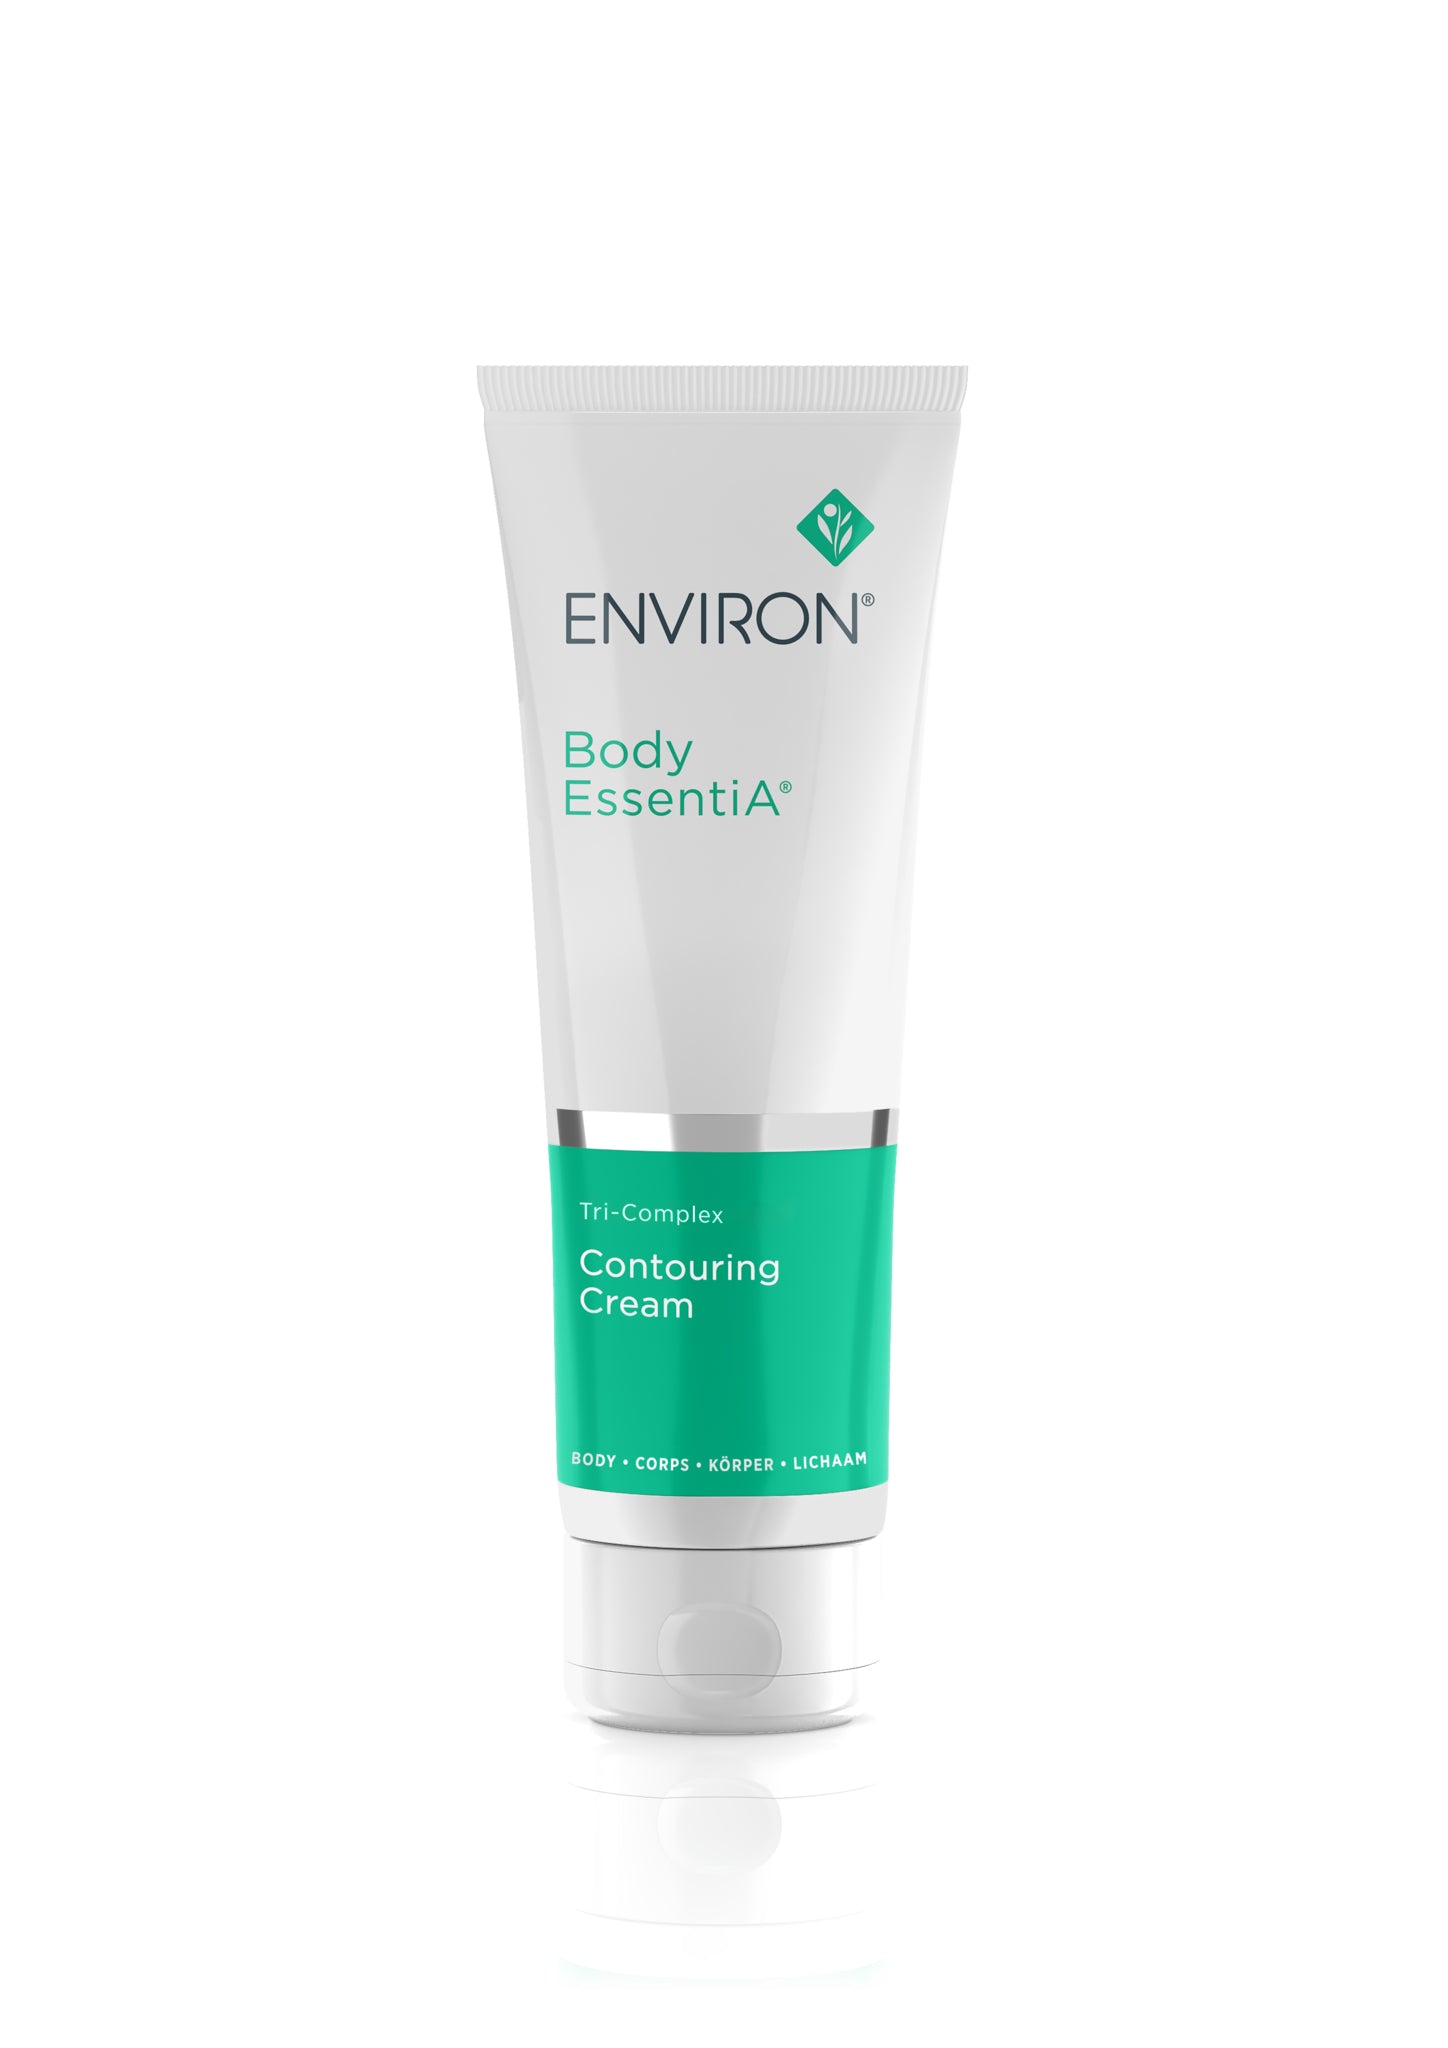 Environ Body EssentiA range - Tri-Complex Contouring Cream